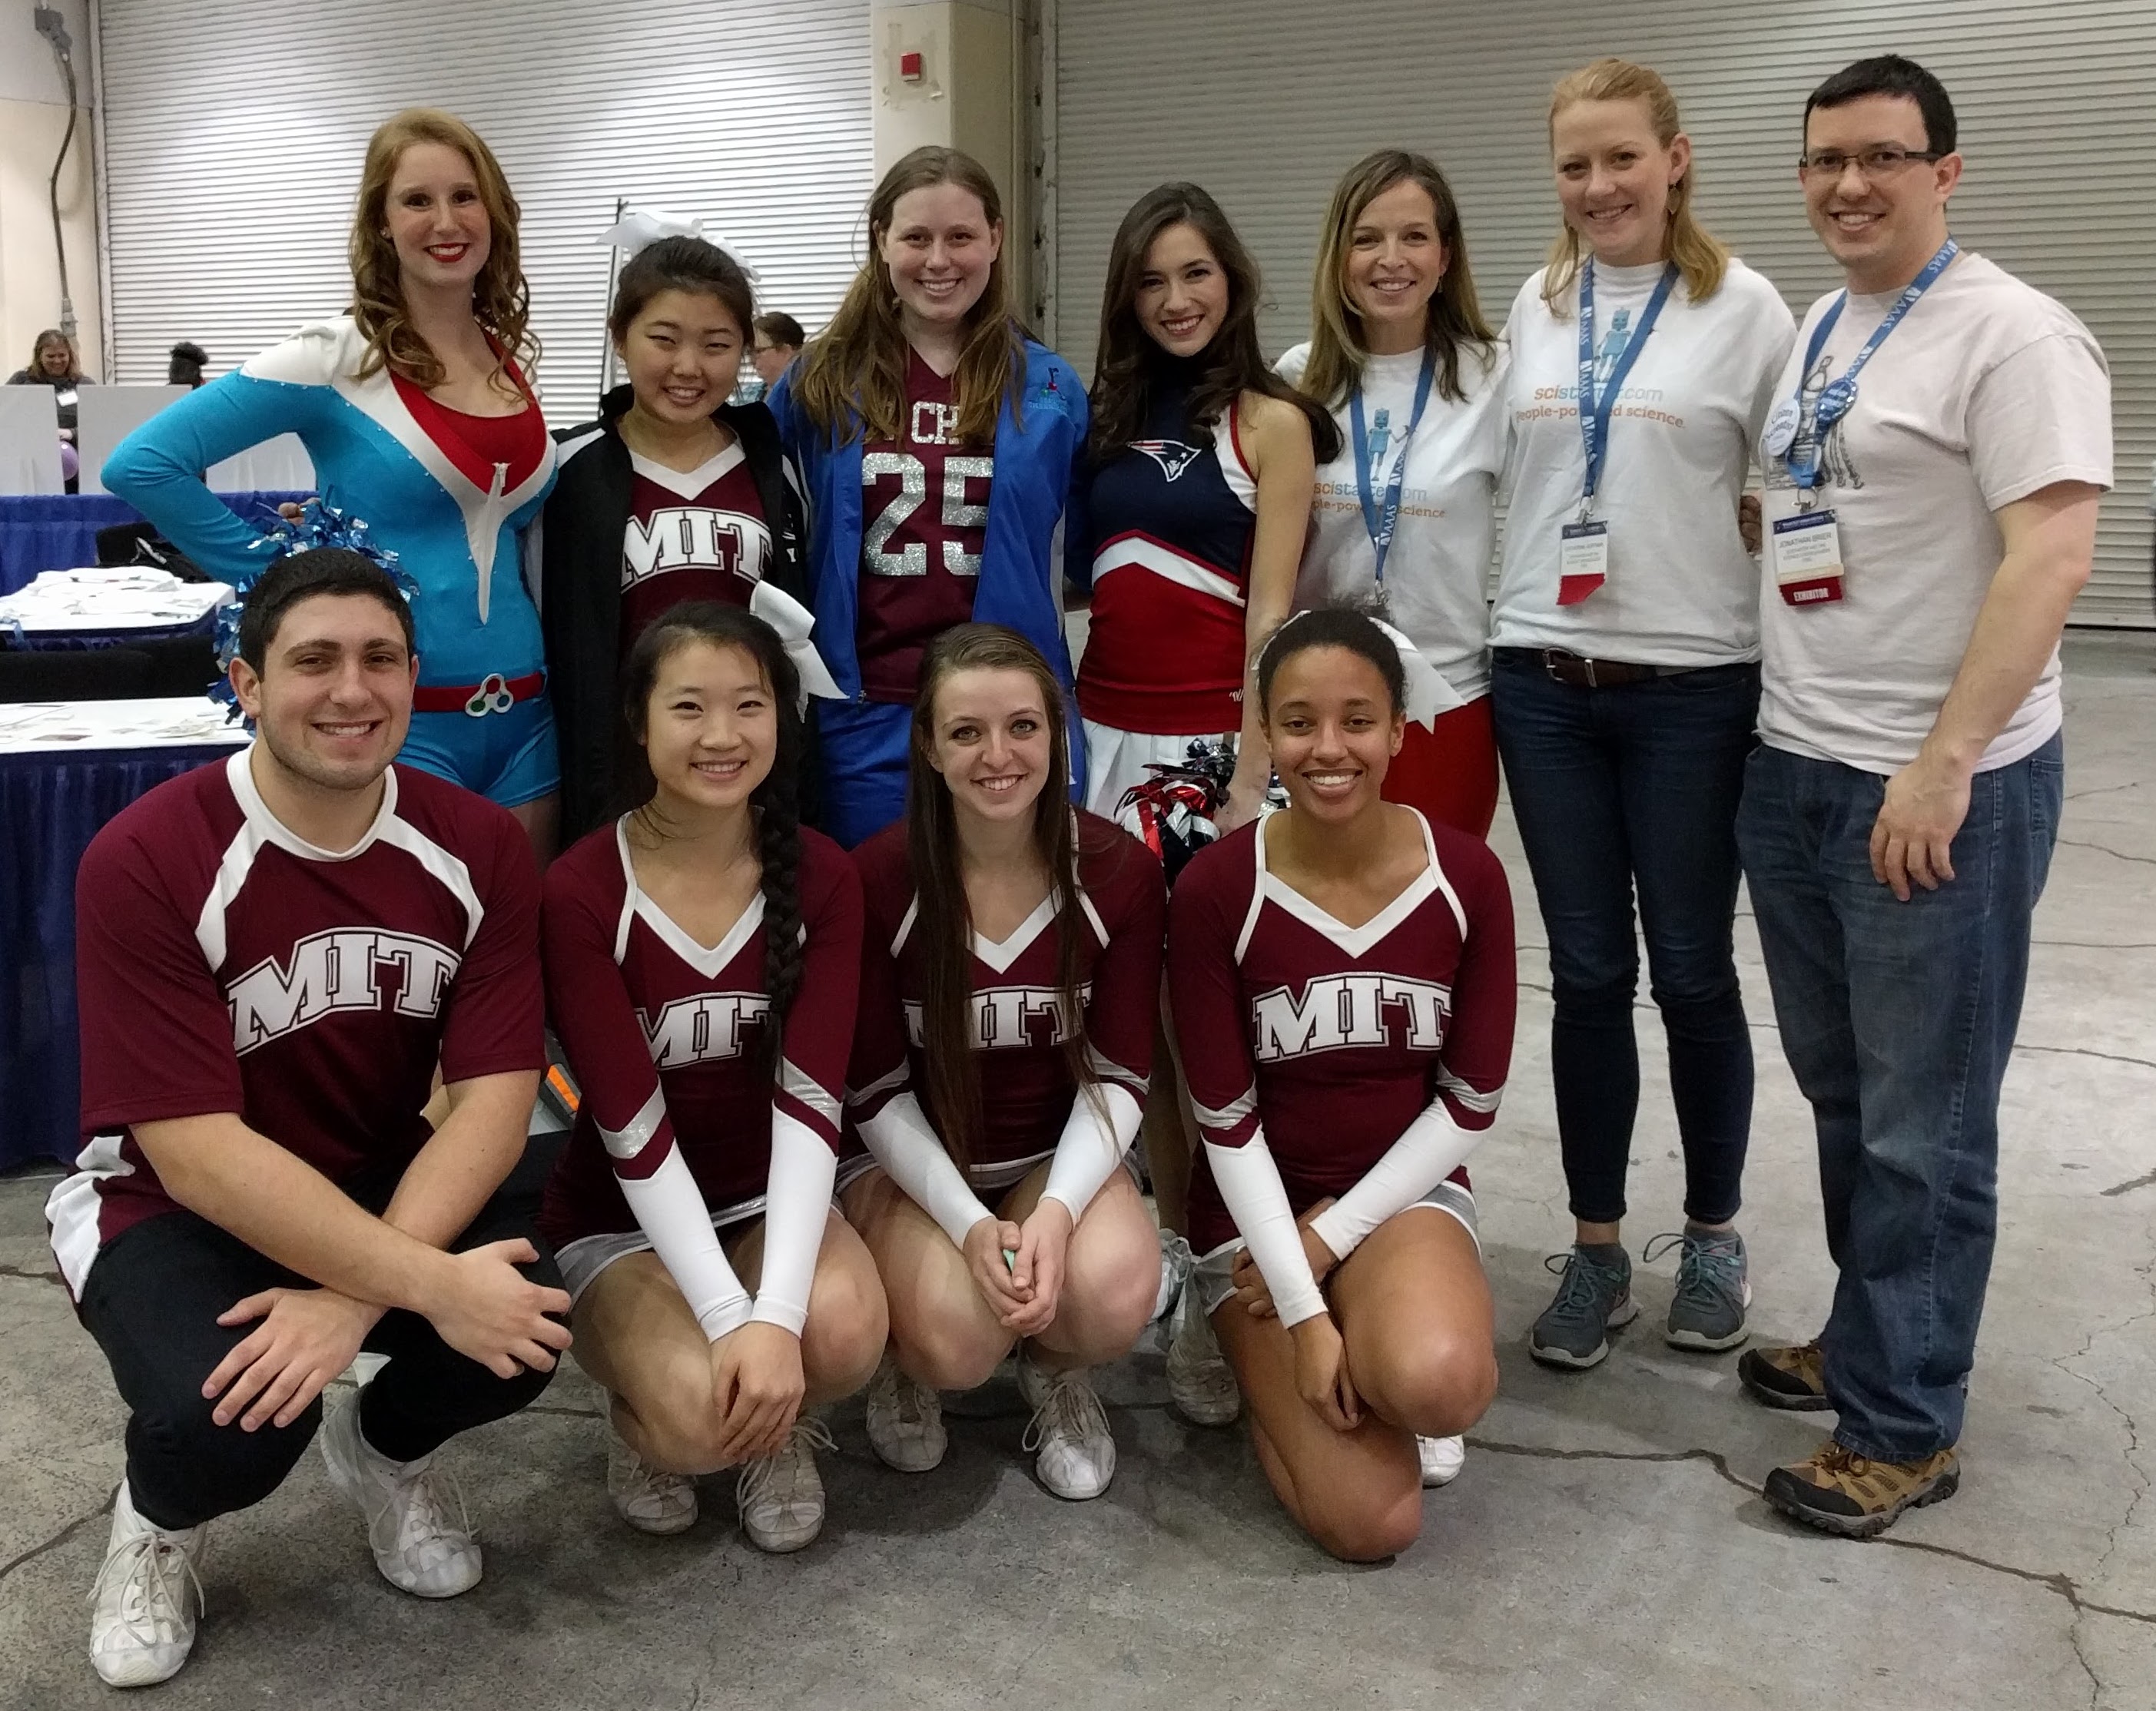 Science Cheerleaders teach physics at AAAS Family Day!